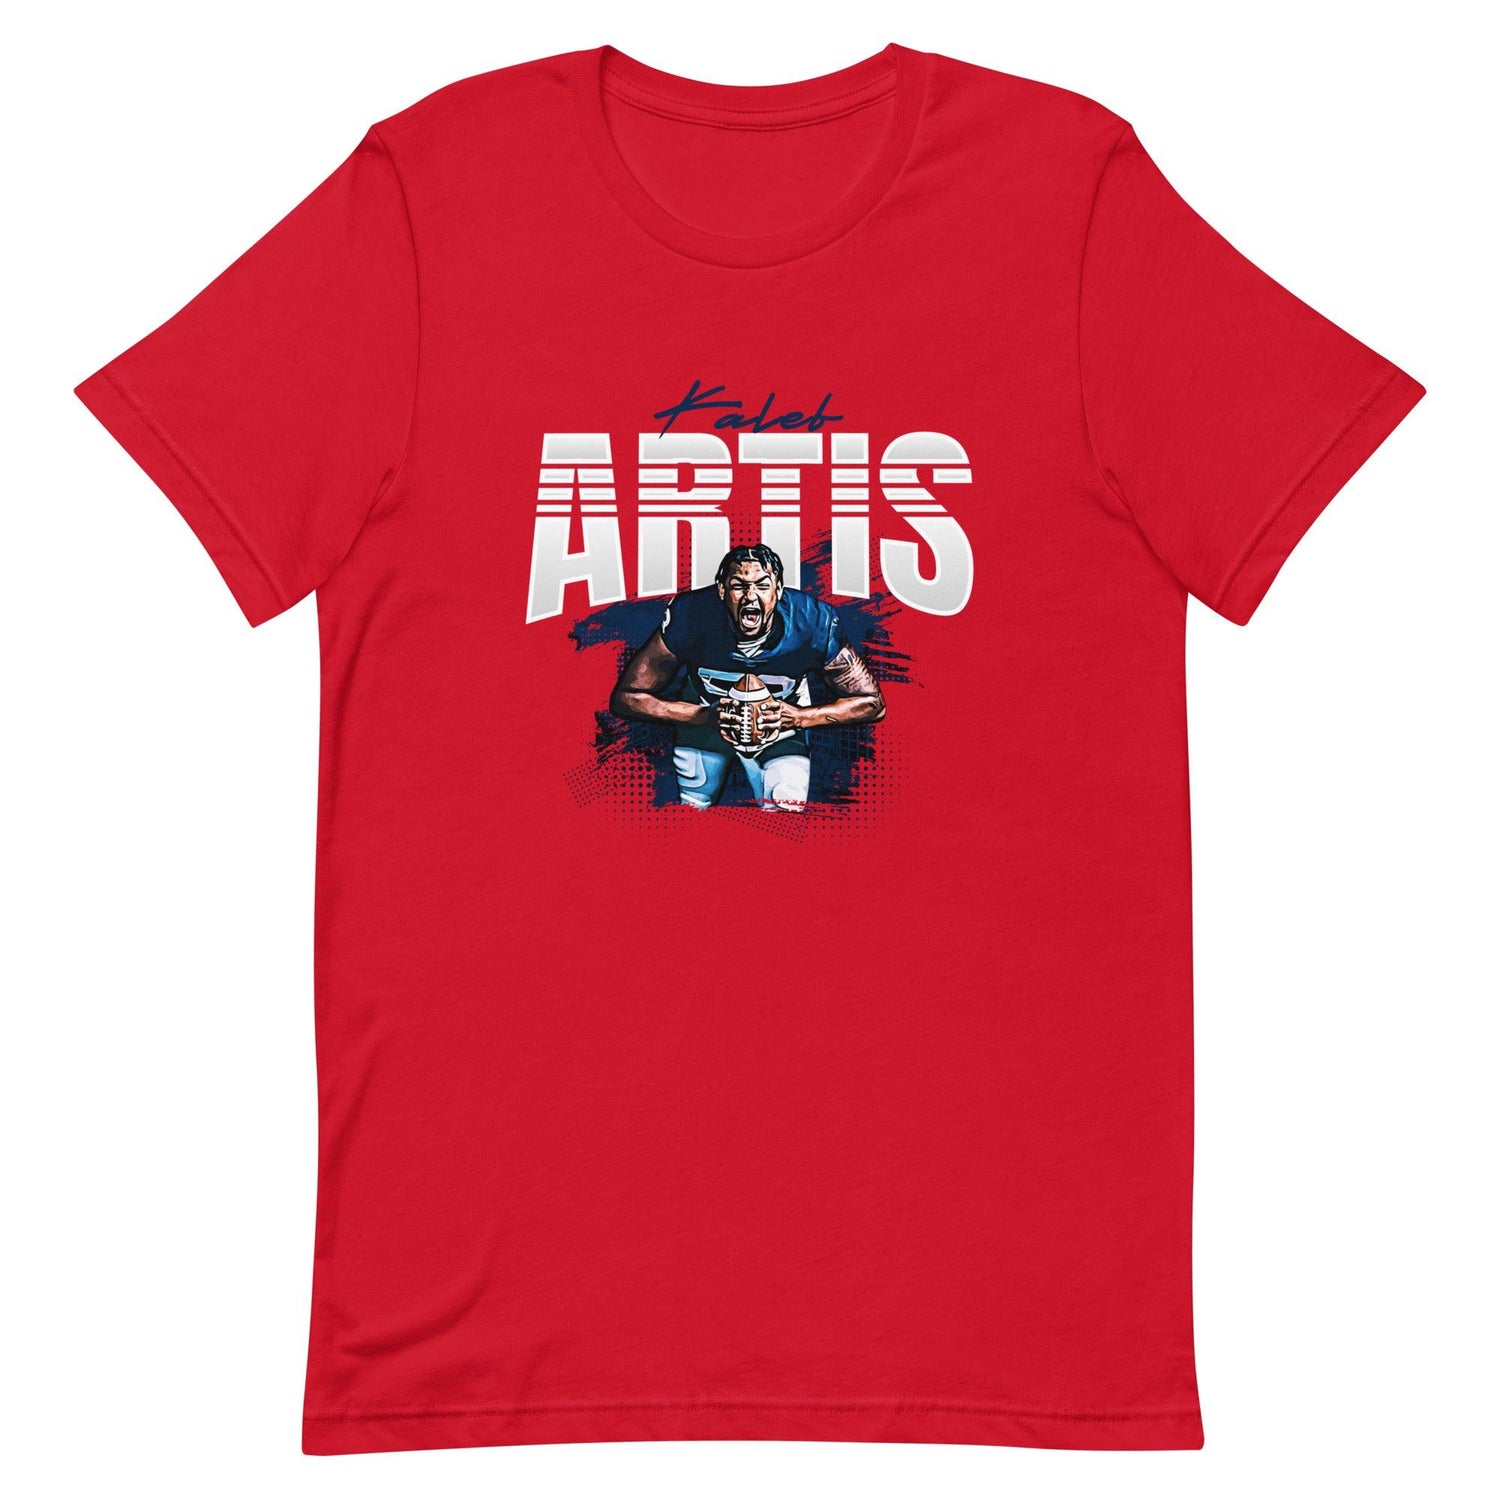 Kaleb Artis "Gameday" t-shirt - Fan Arch